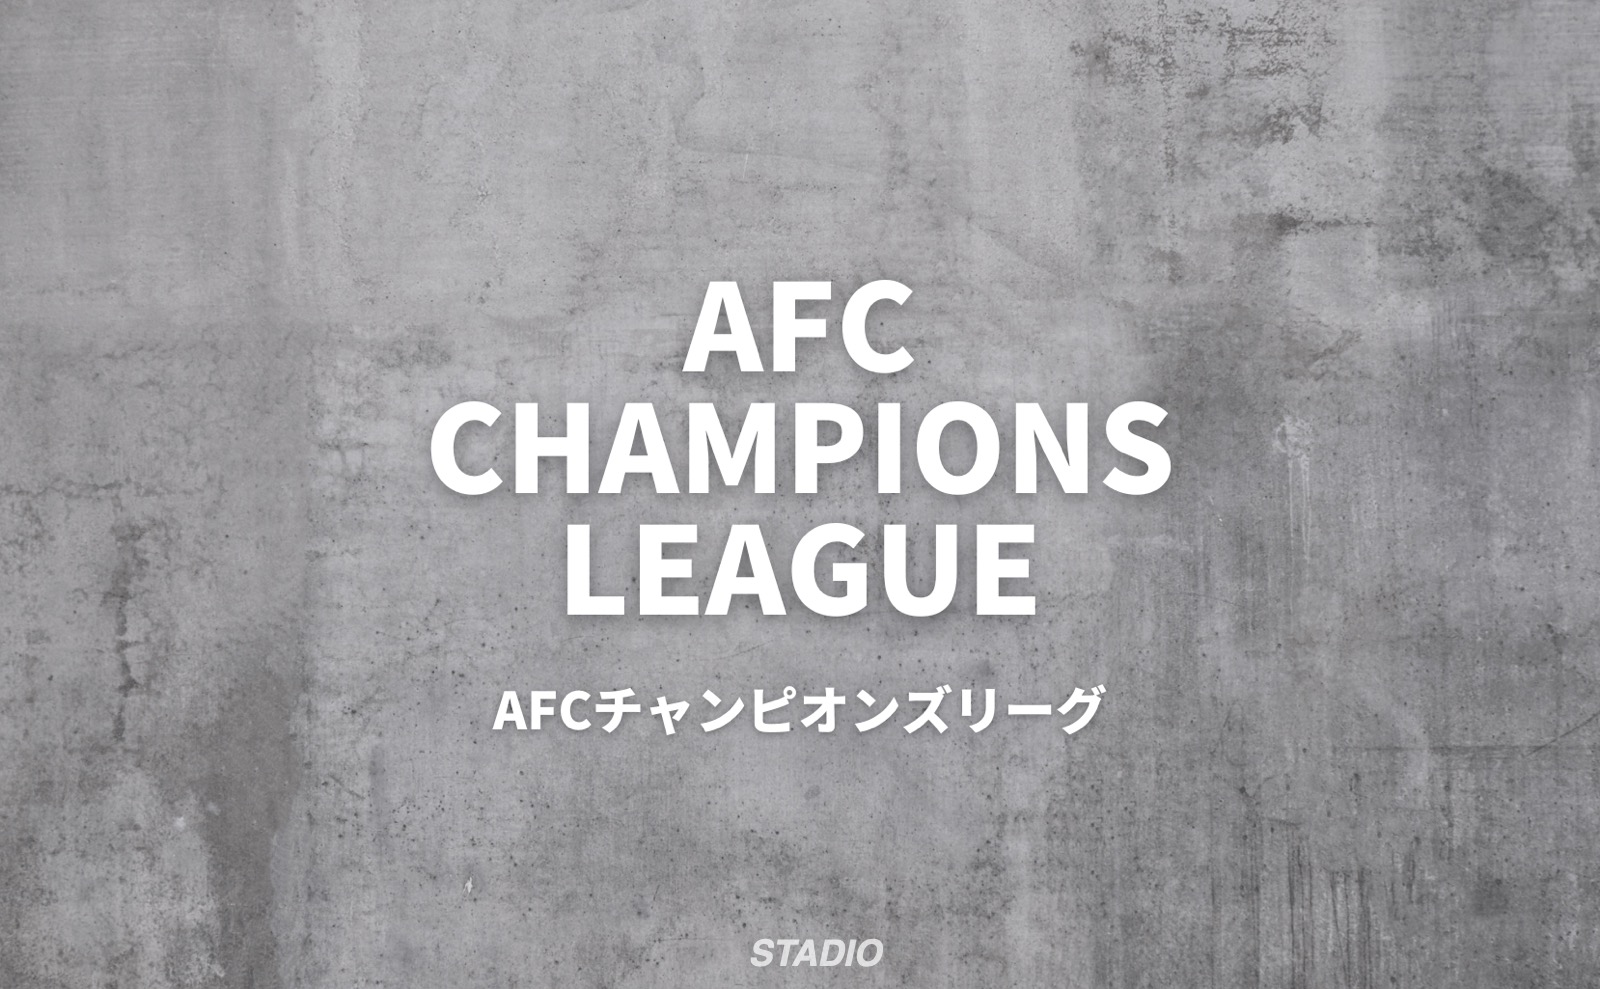 AFCチャンピオンズリーグ AFC CHAMPIONS LEAGUE